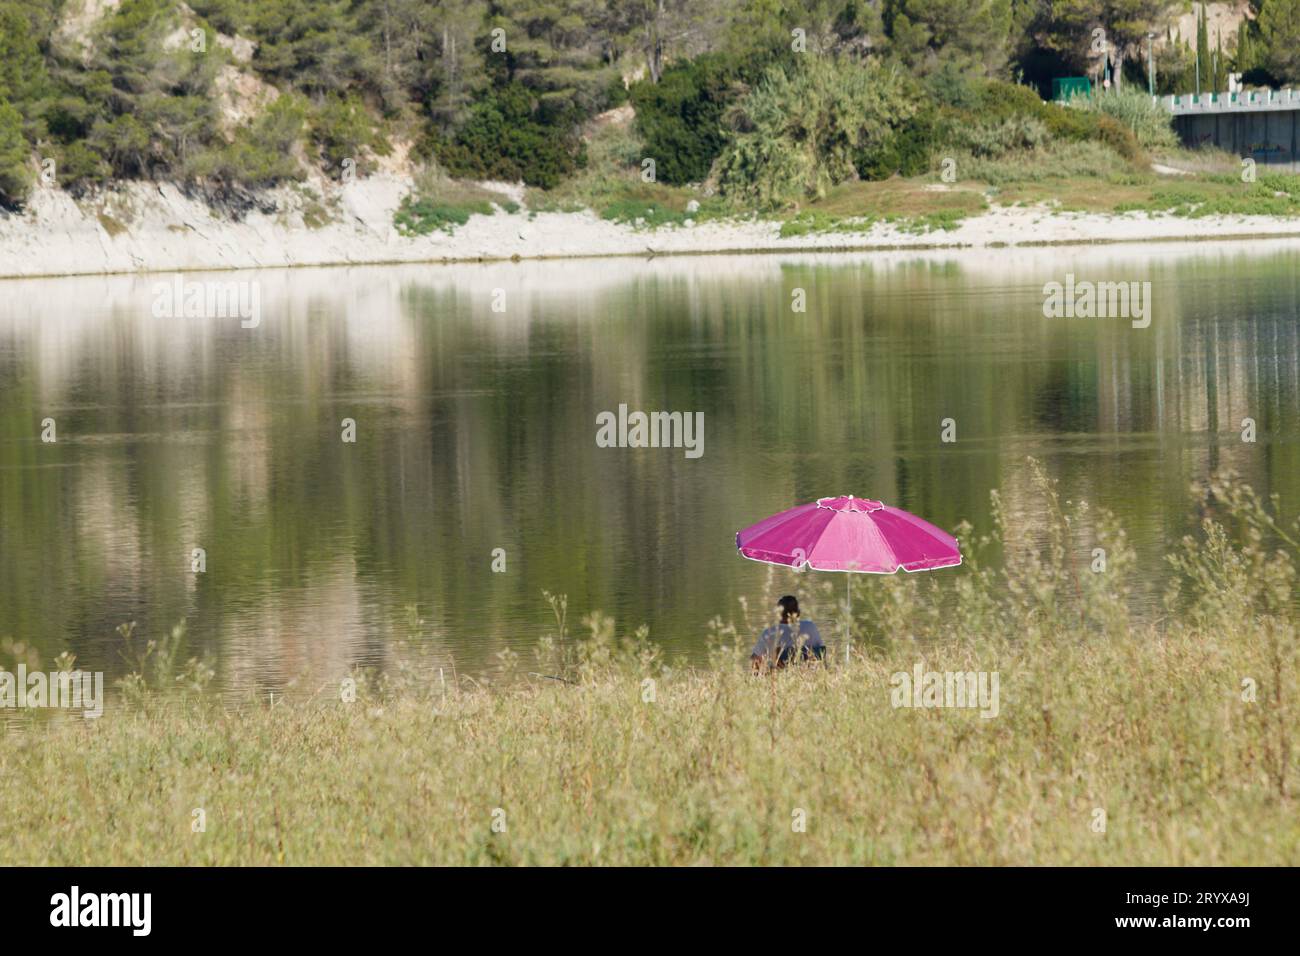 Fishing umbrella at river or lake beach Stock Photo - Alamy